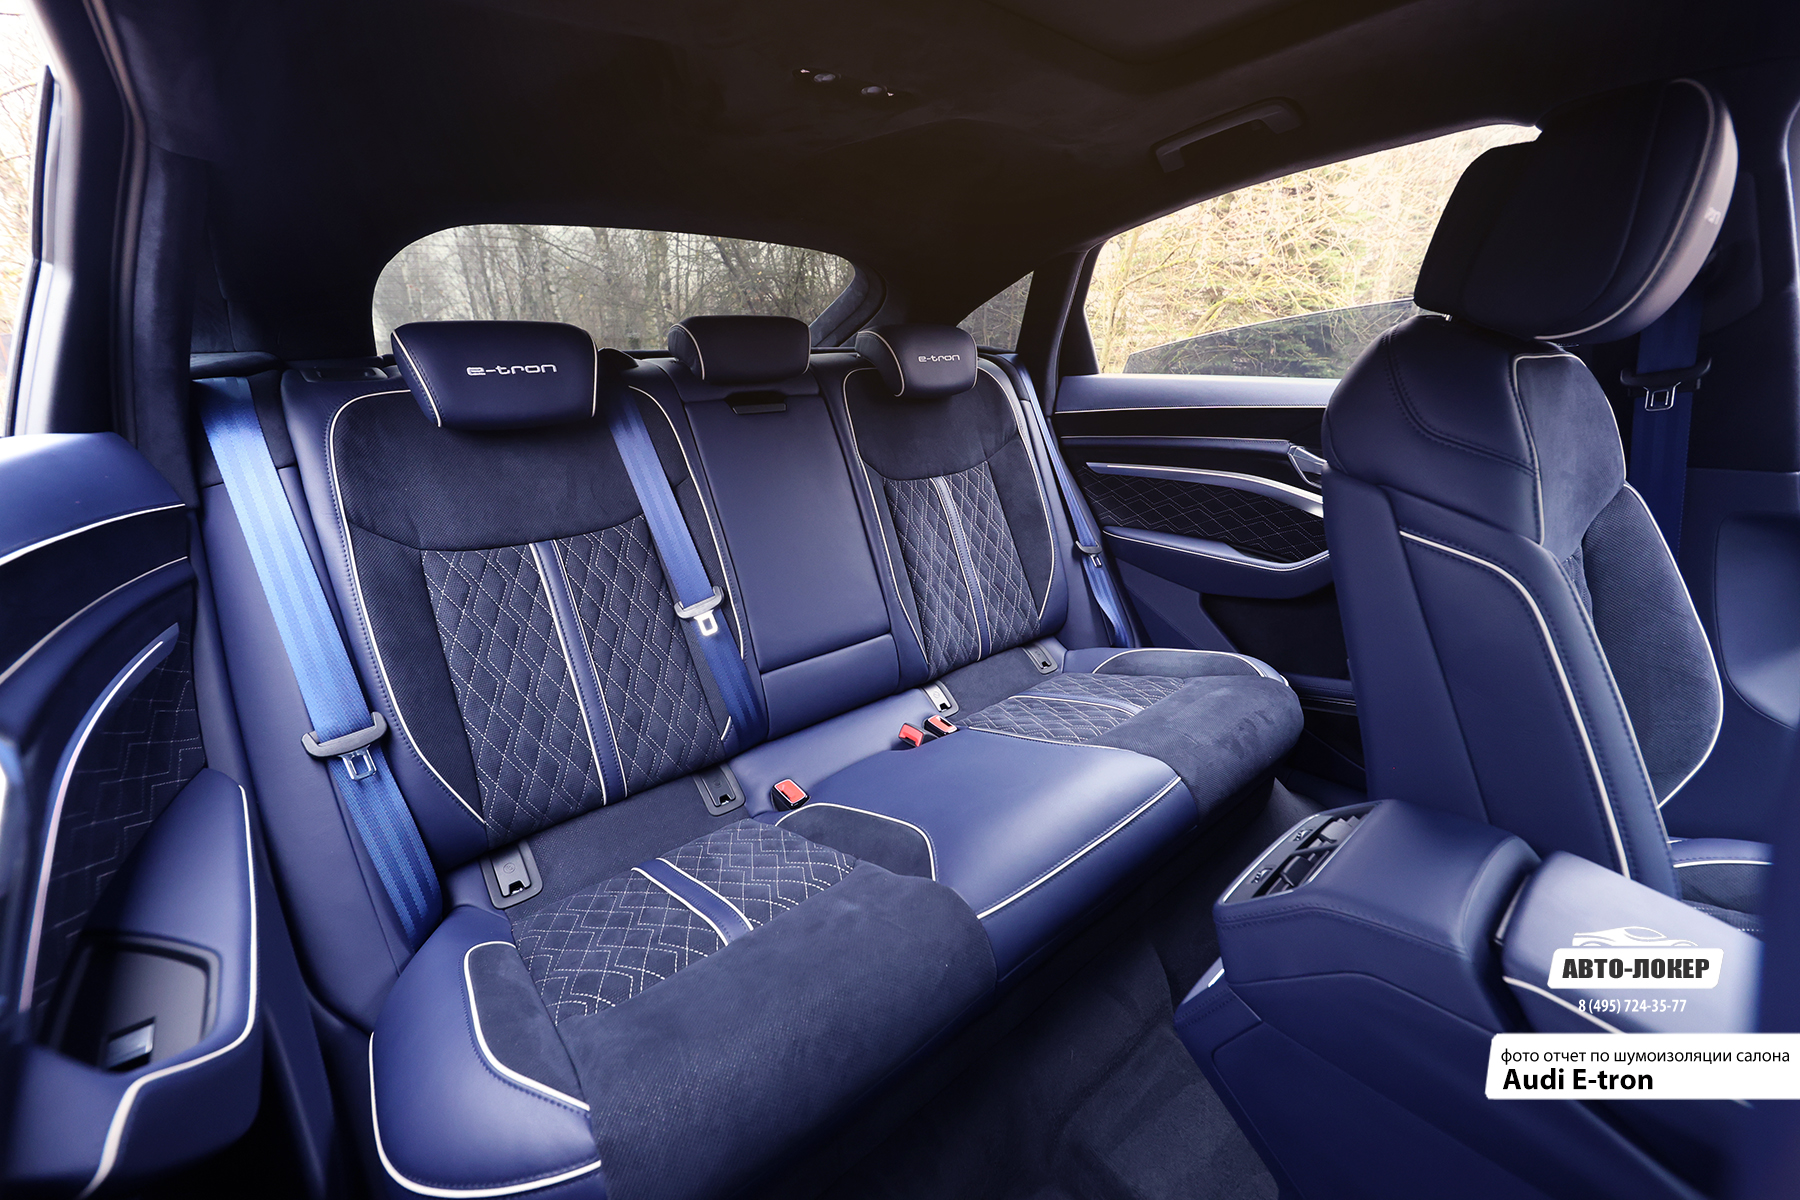 Перетяжка задних сидений салона Audi E-tron в натуральную кожу